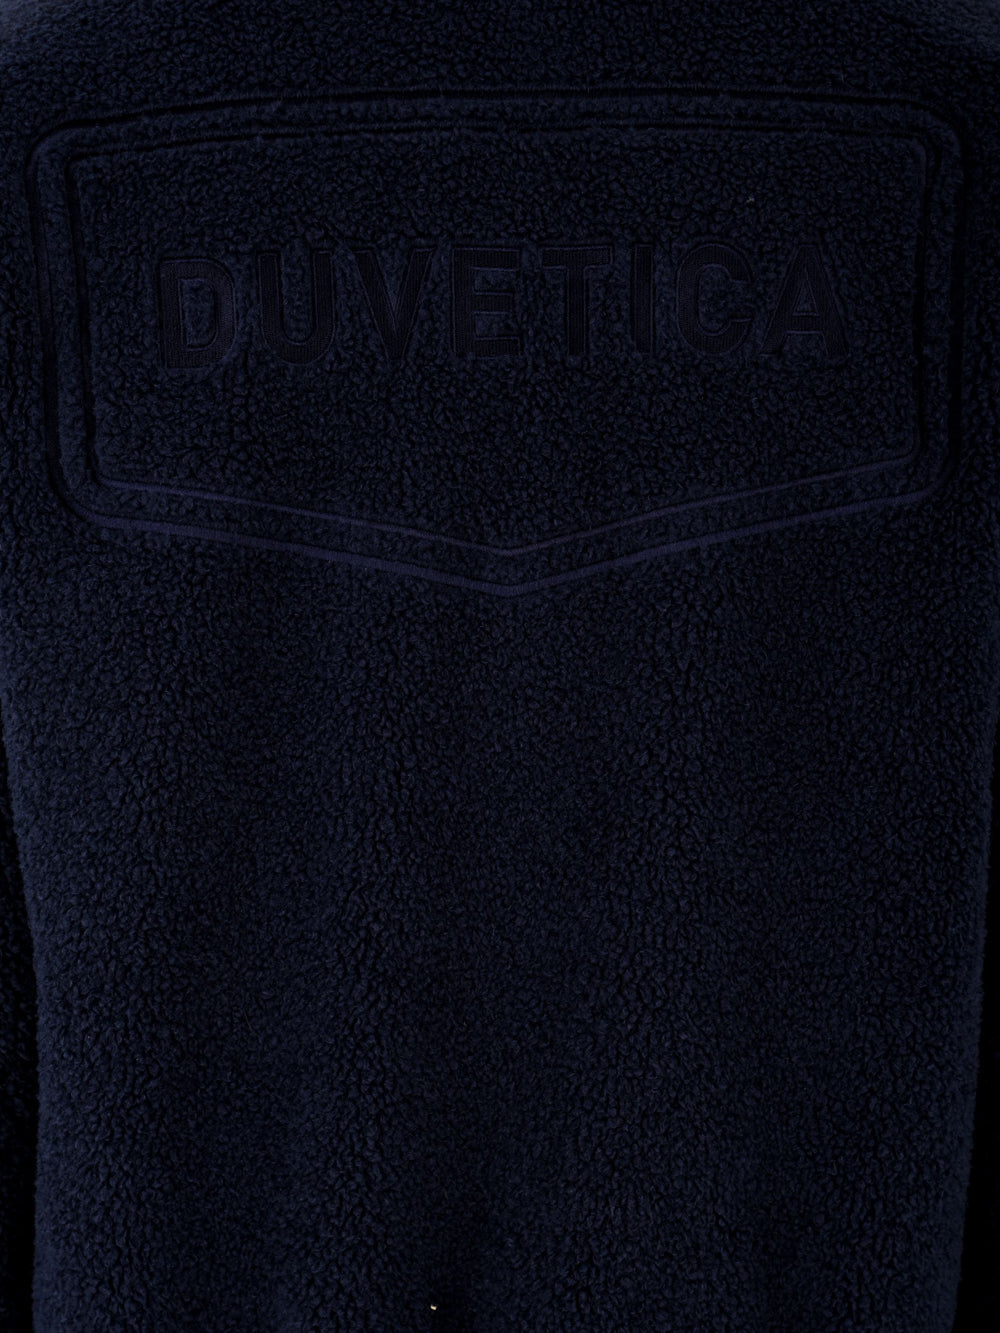 Giubbotto Uomo Double Face Feliciotto, Duvetica, Parte 1, blu, logo grande retro